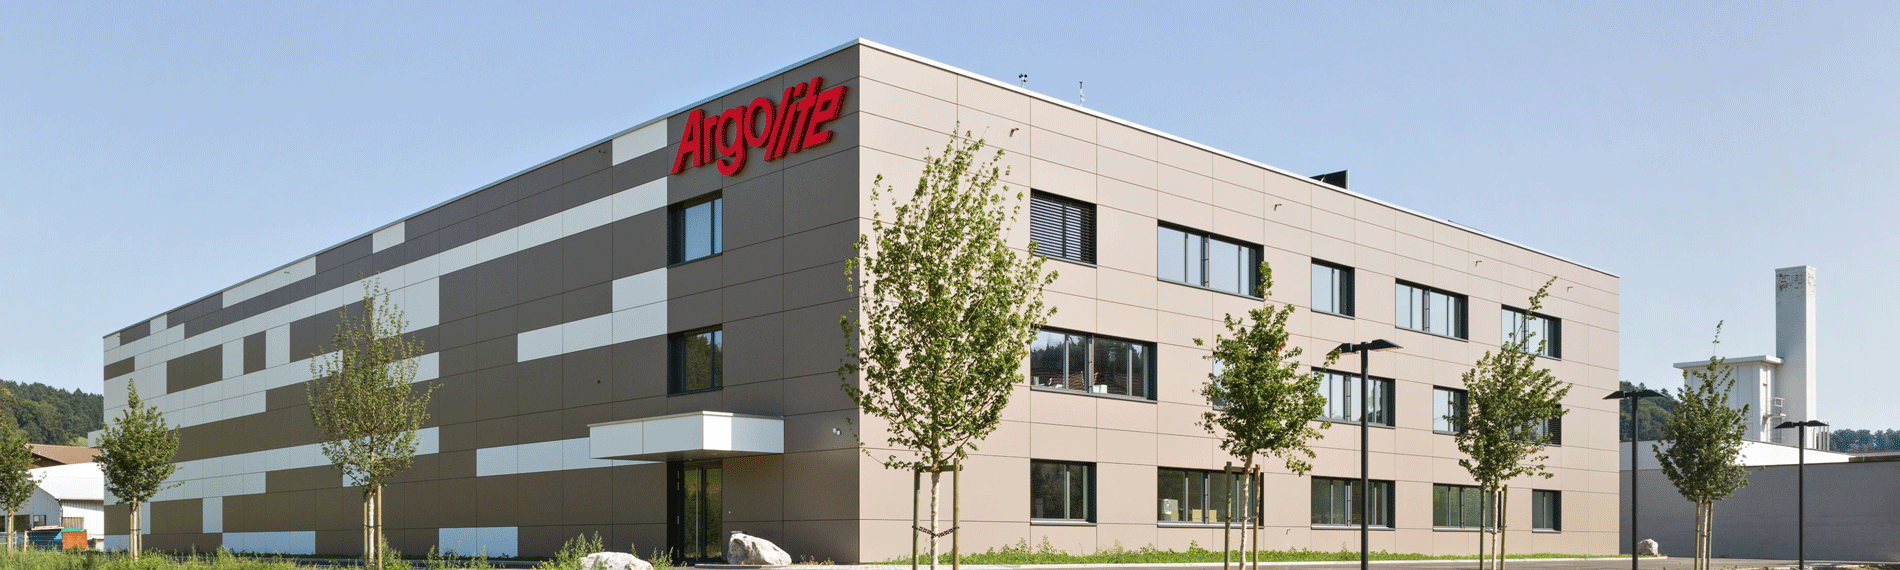 Hauptsitz Argolite AG Willisau | © argolite.ch